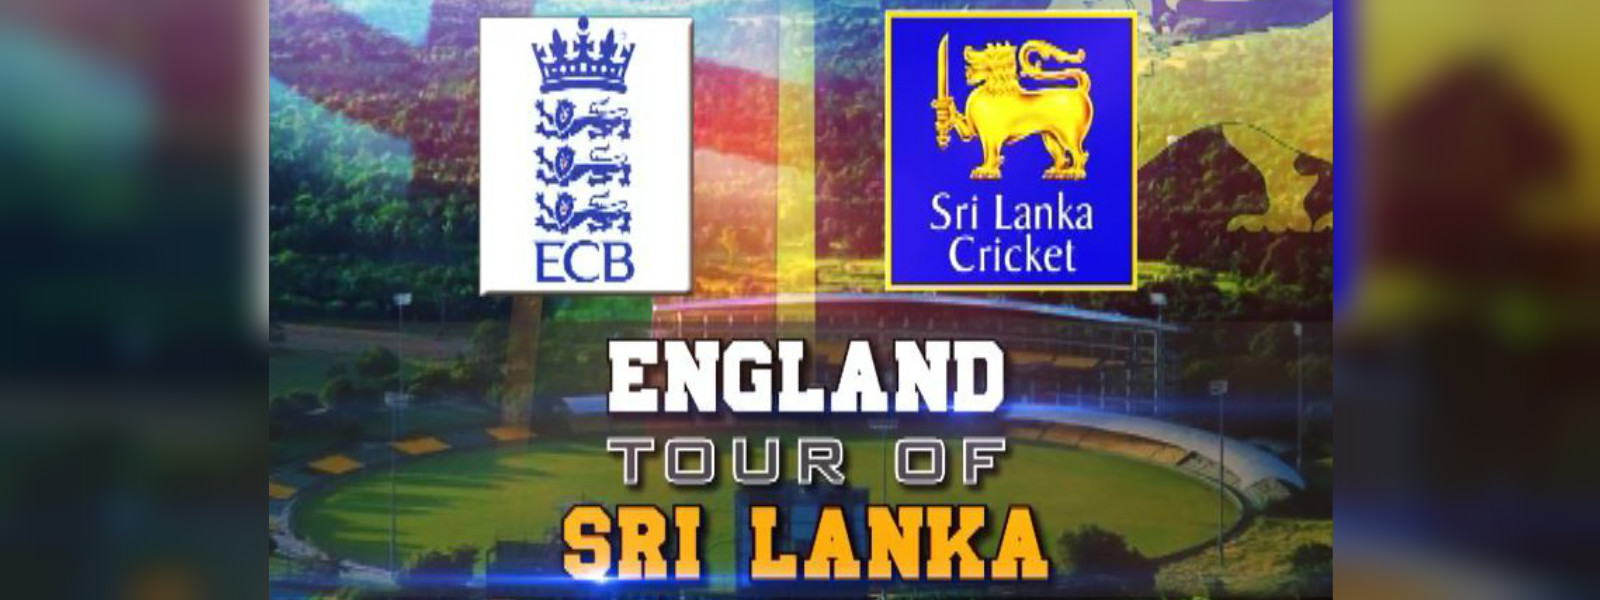 England wins the 4th ODI against Sri Lanka